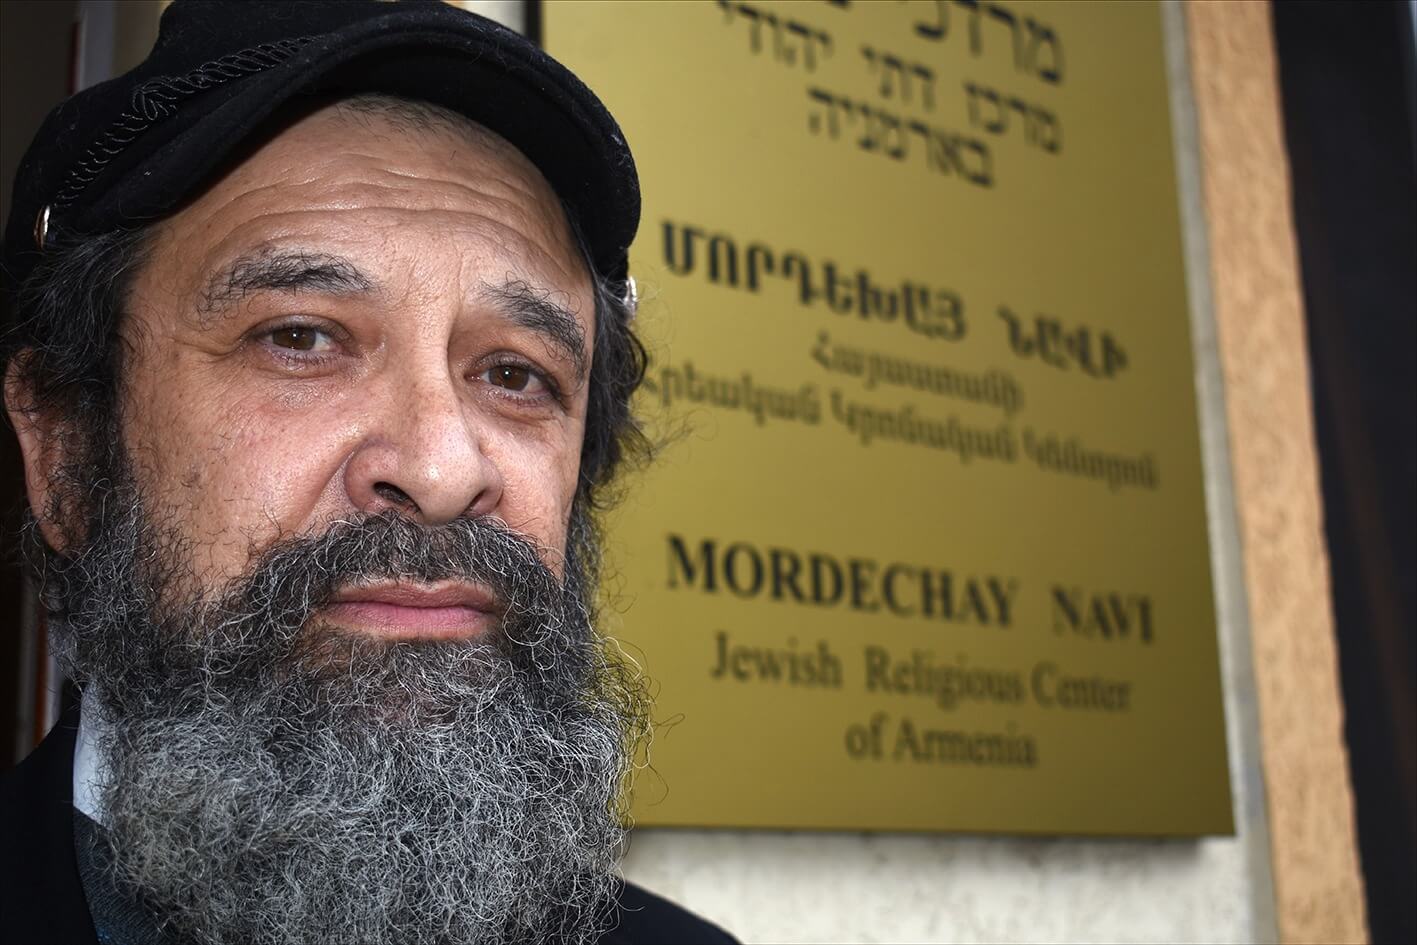 Rabbi Gershon Burshteyn, spiritual leader of the Mordechay Navi Jewish Religious Center of Armenia, seen outside the center he leads.